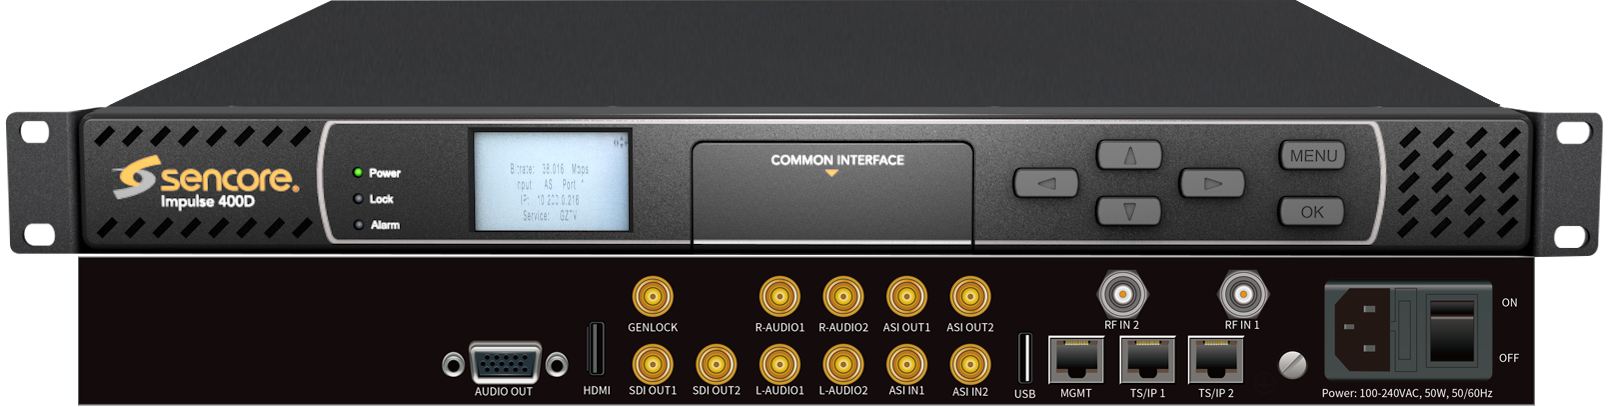 Sencore Introduces the Impulse 400D Commercial TV 4K UHD Receiver/Decoder